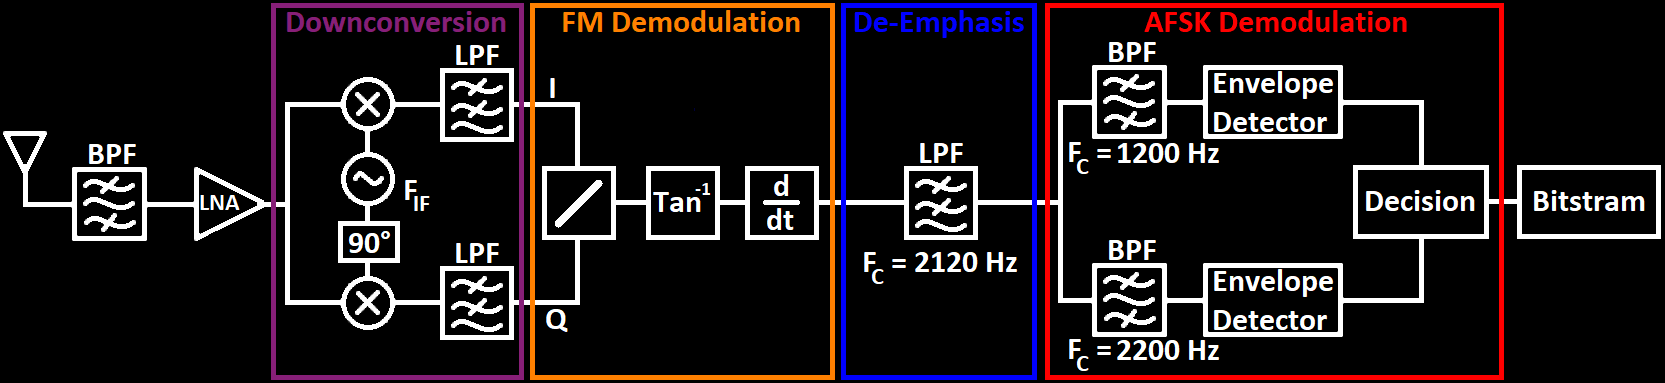 FM-AFSK Demodulation Block Diagram